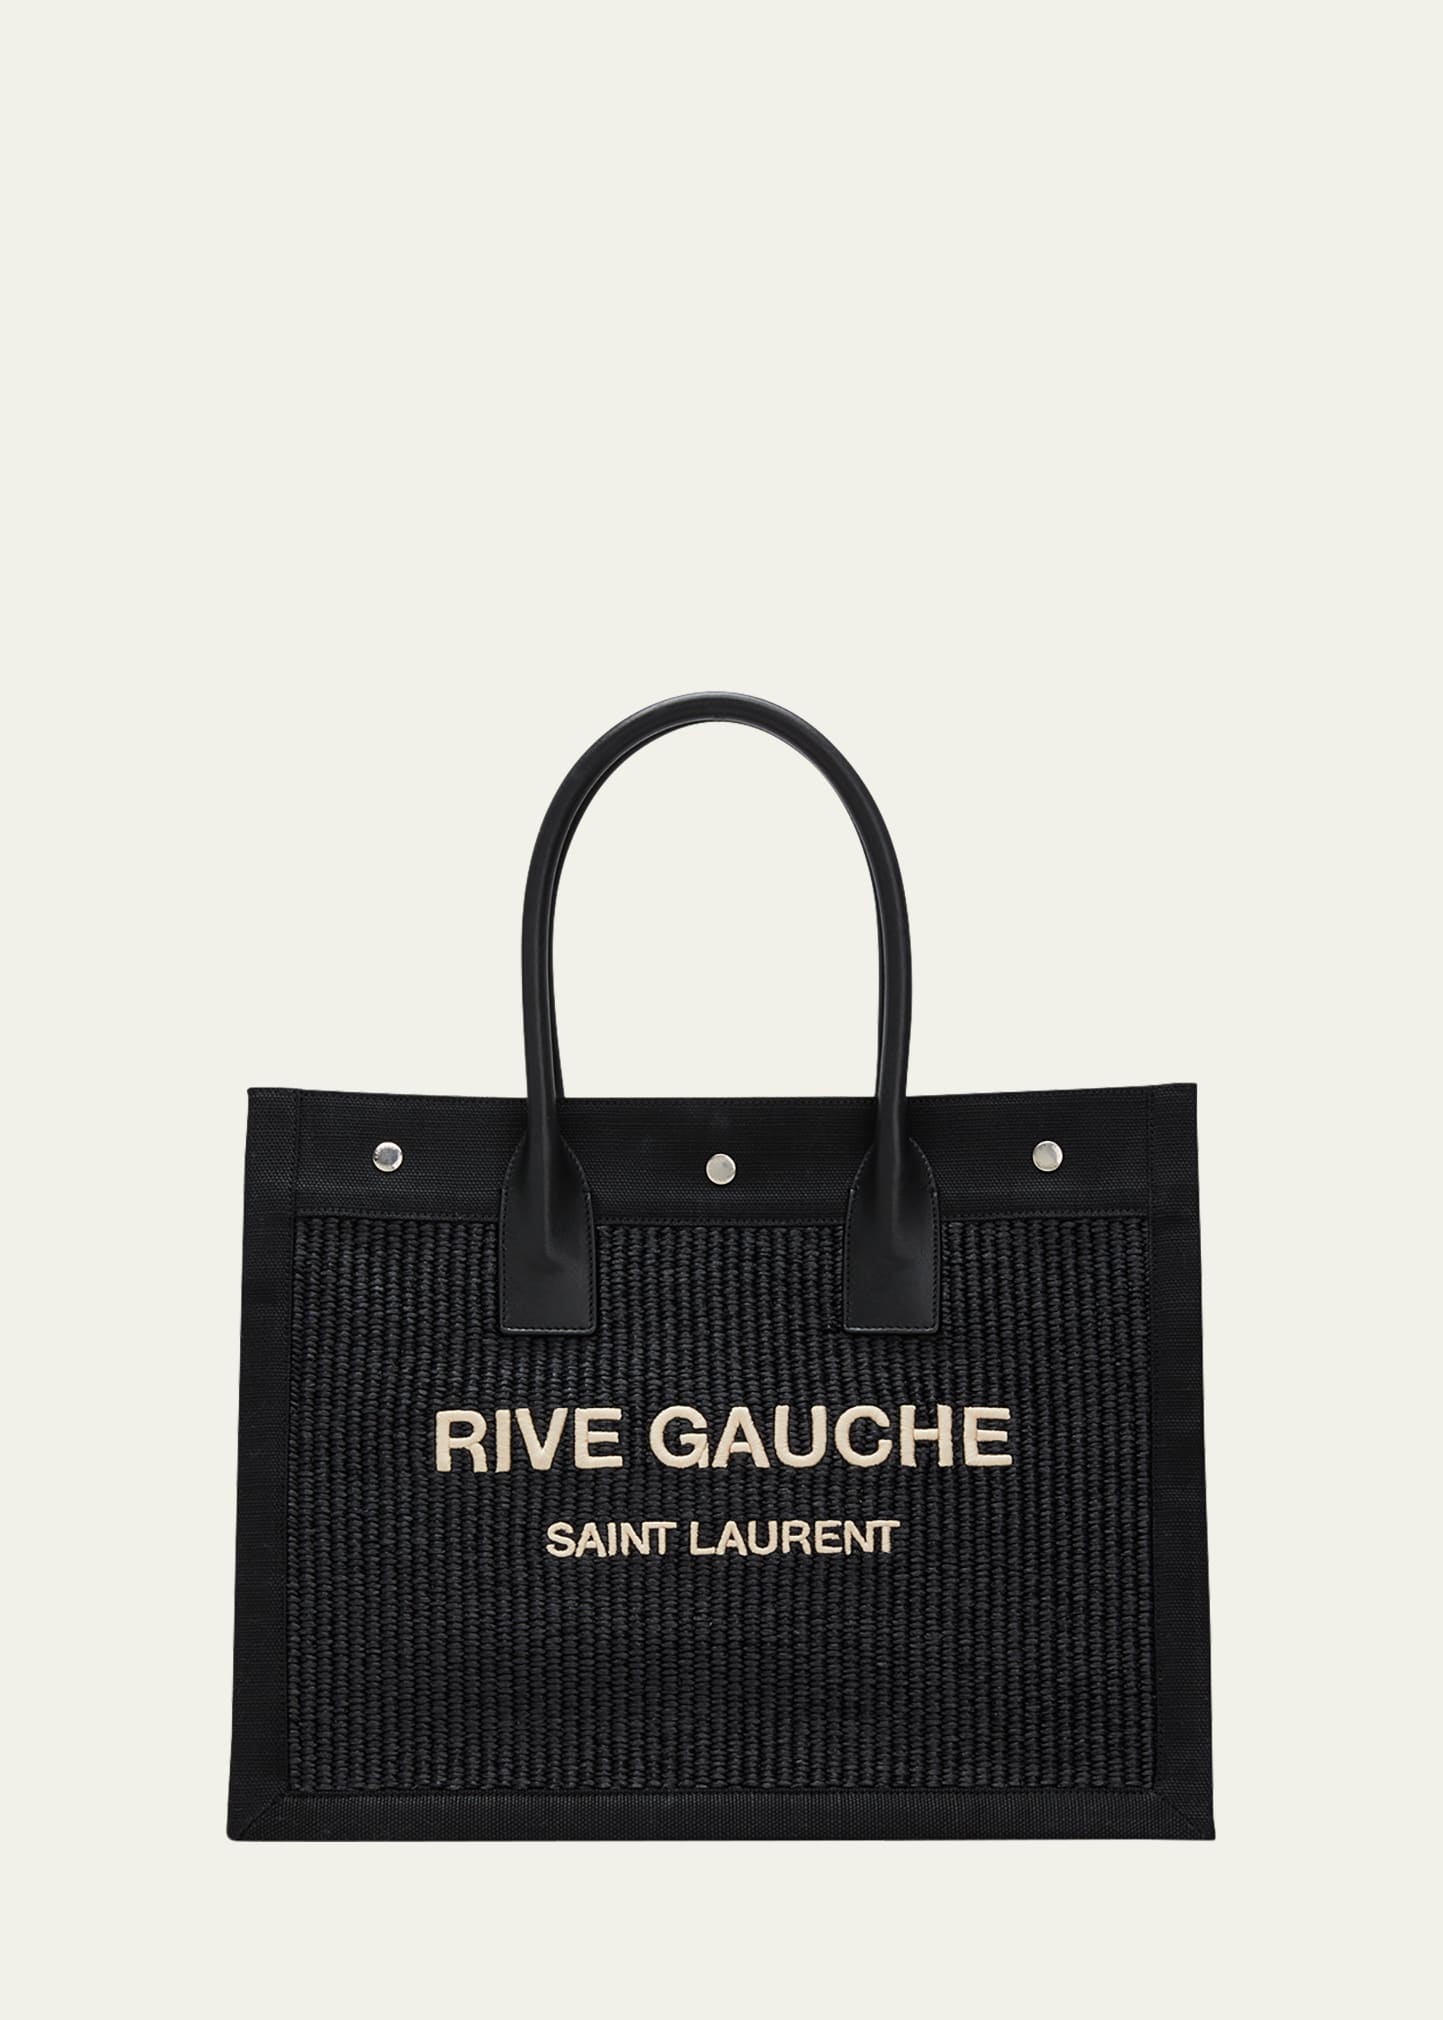 Saint Laurent Rive Gauche Small Tote Bag in Raffia | Bergdorf Goodman